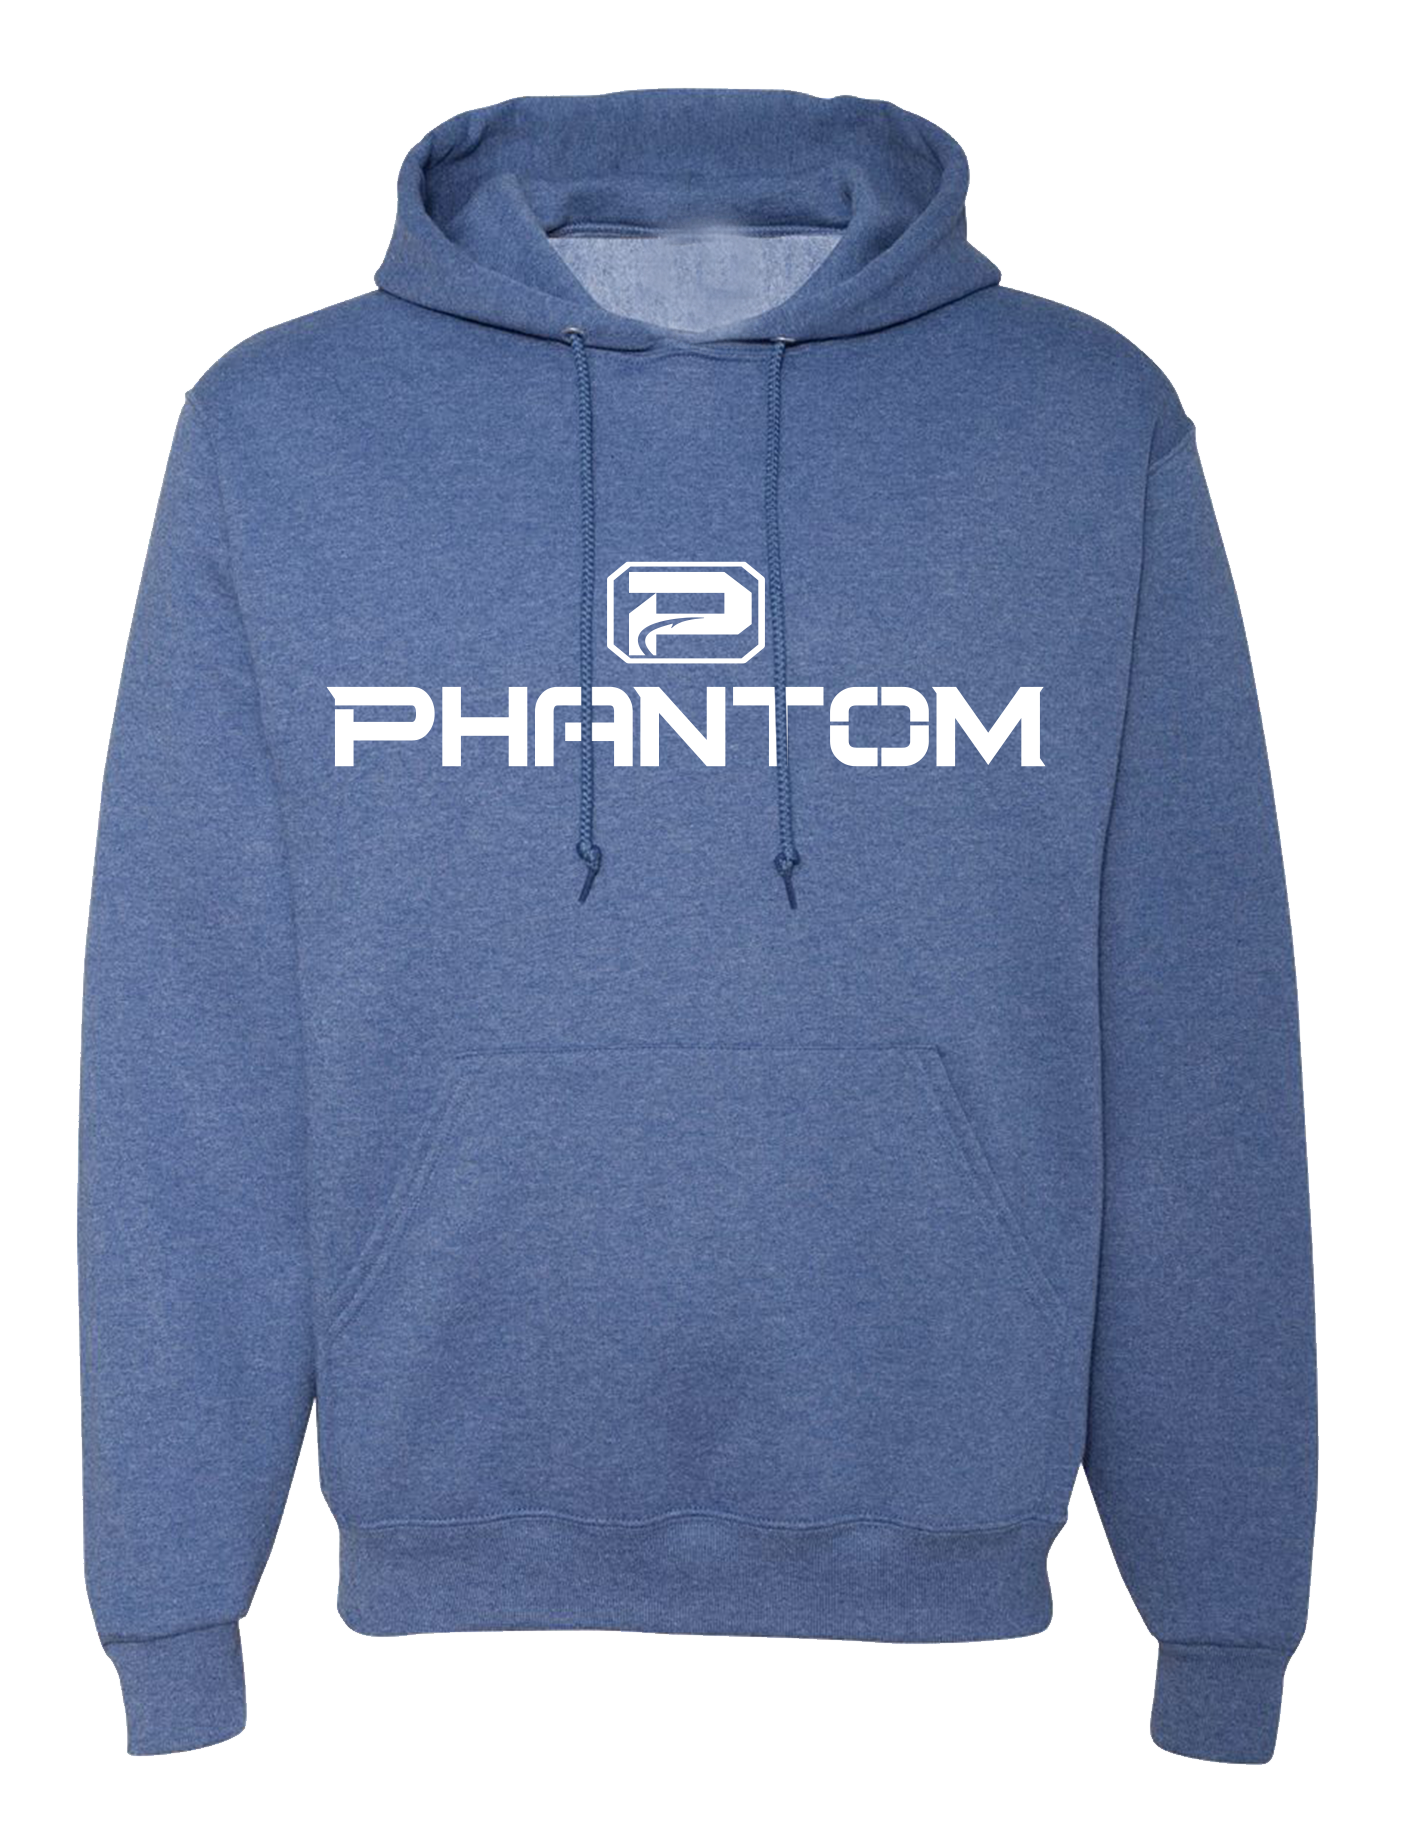 PHANTOM COTTON HOODIES - Phantom Outdoors